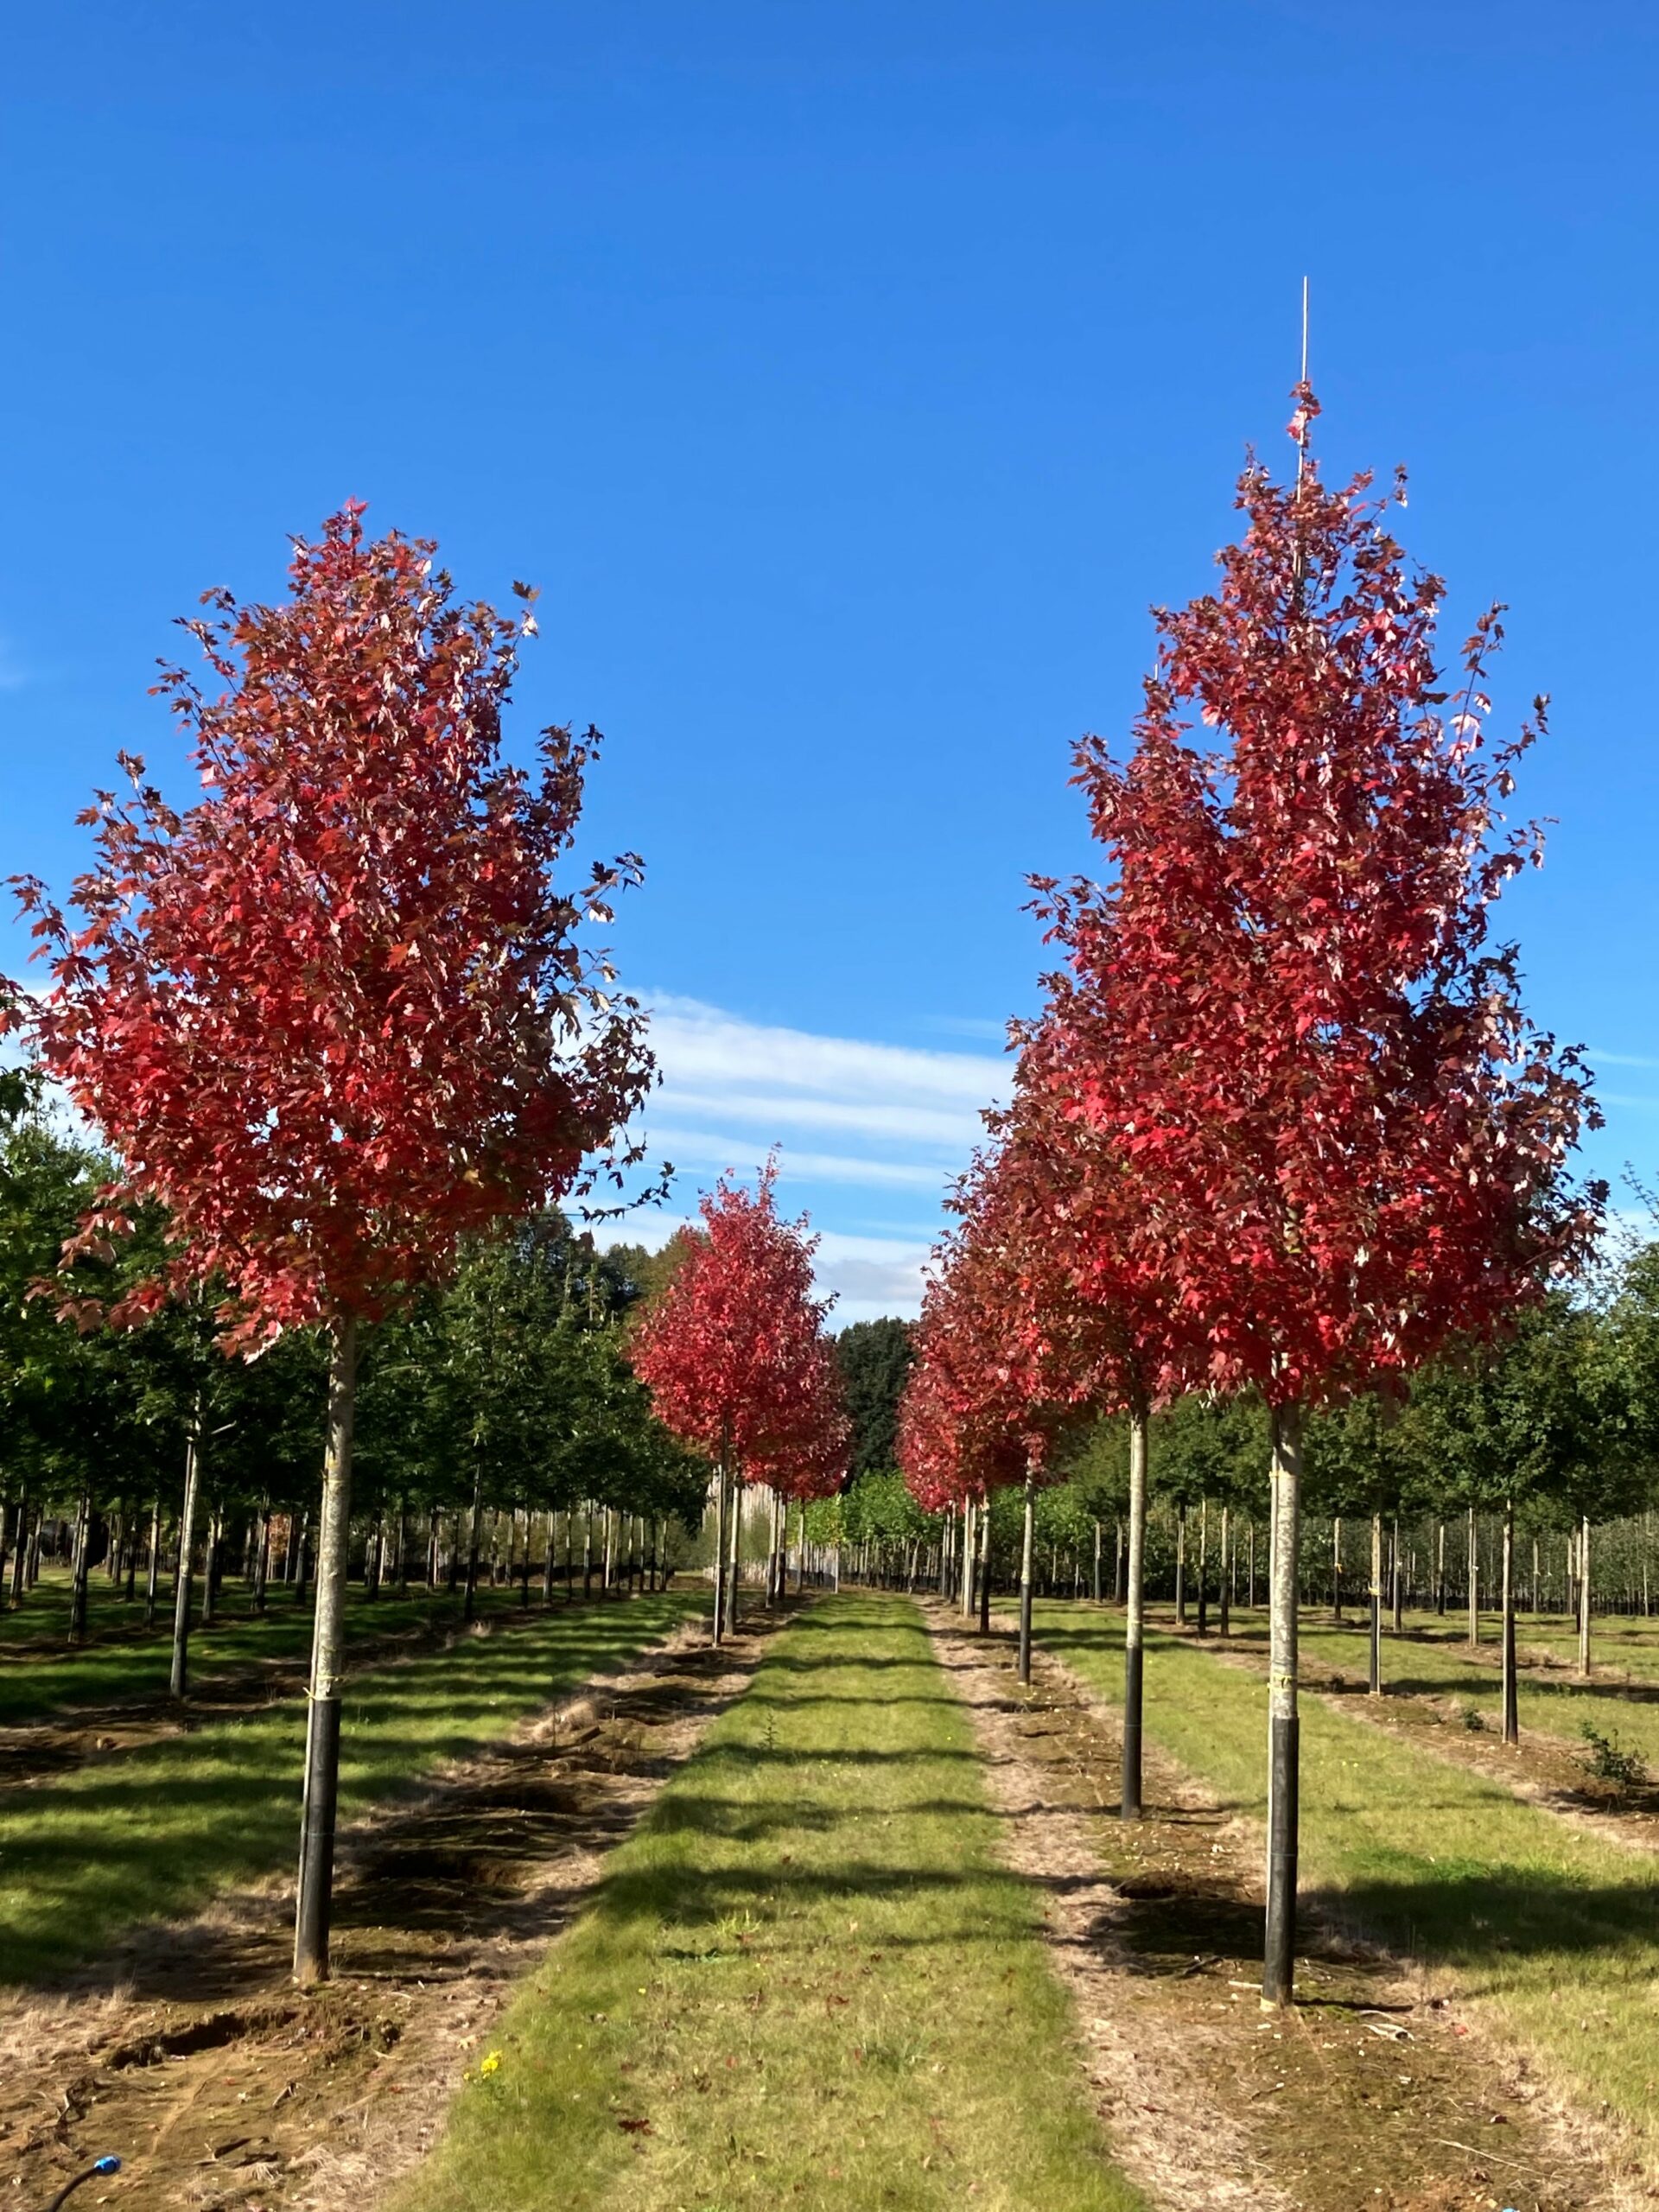 Acer freemanii Autumn Blaze semi-mature trees in autumn colour growing in field